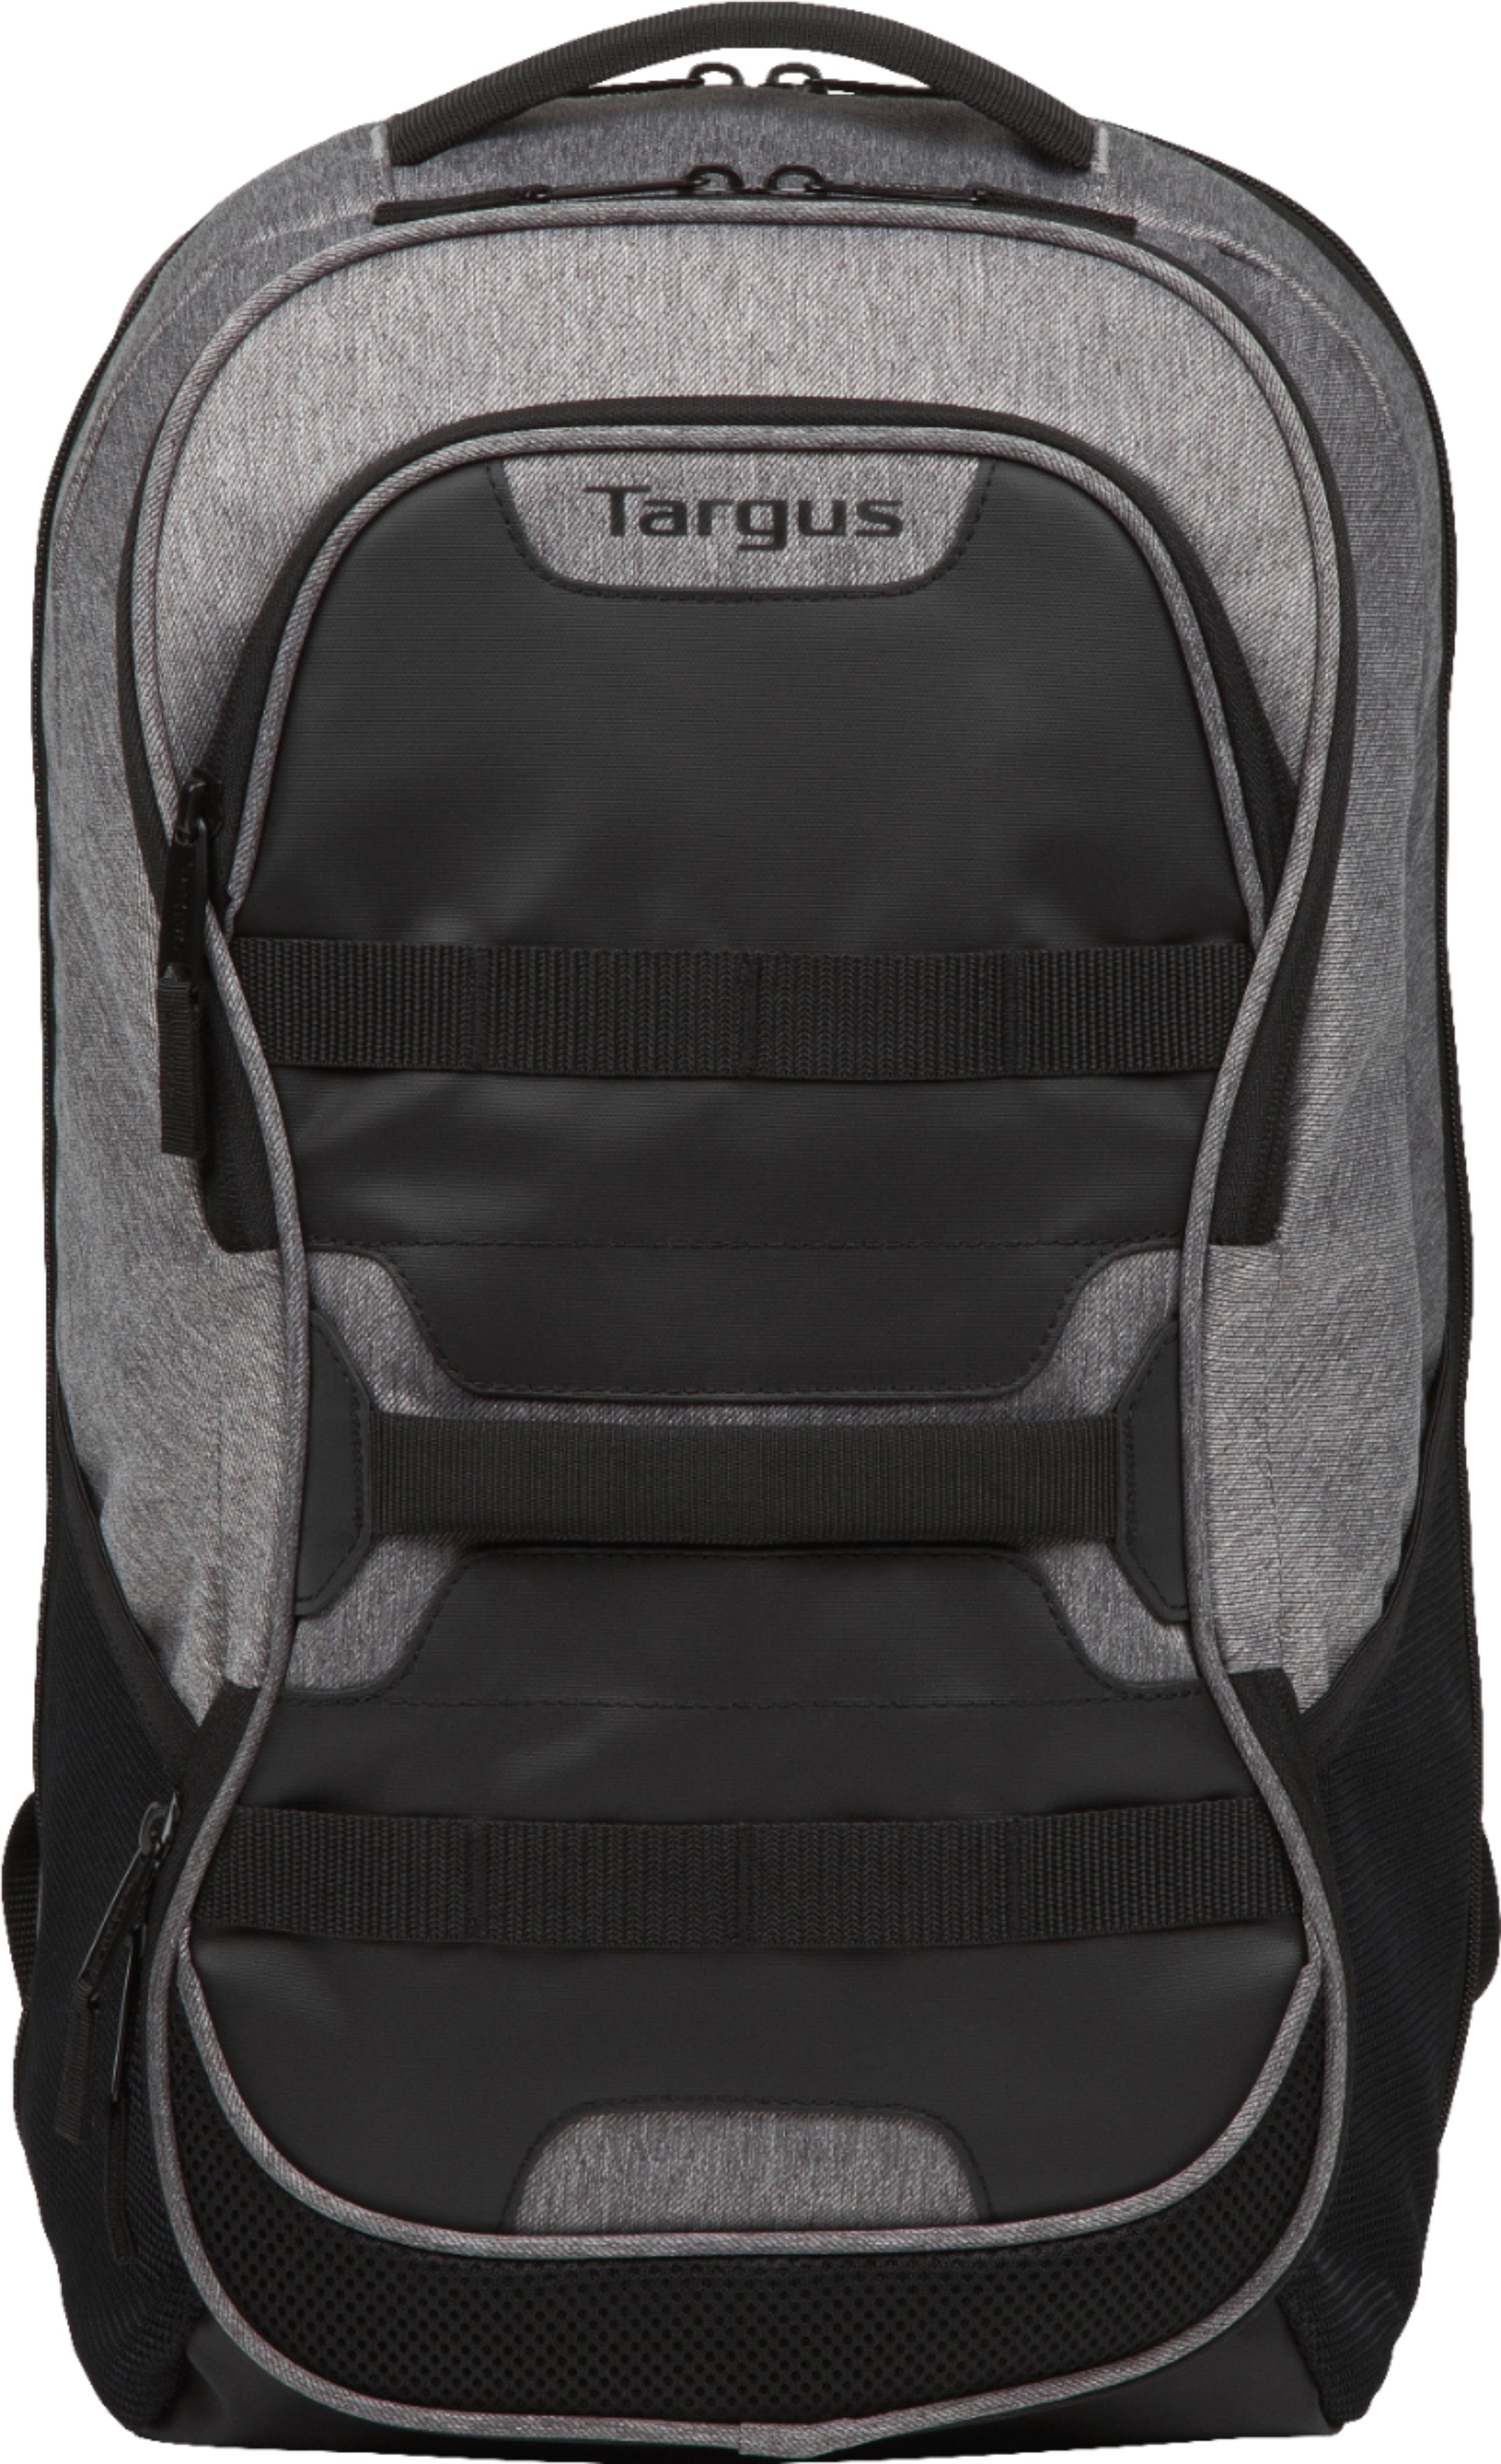 Targus - Work + Play Laptop Backpack - Gray